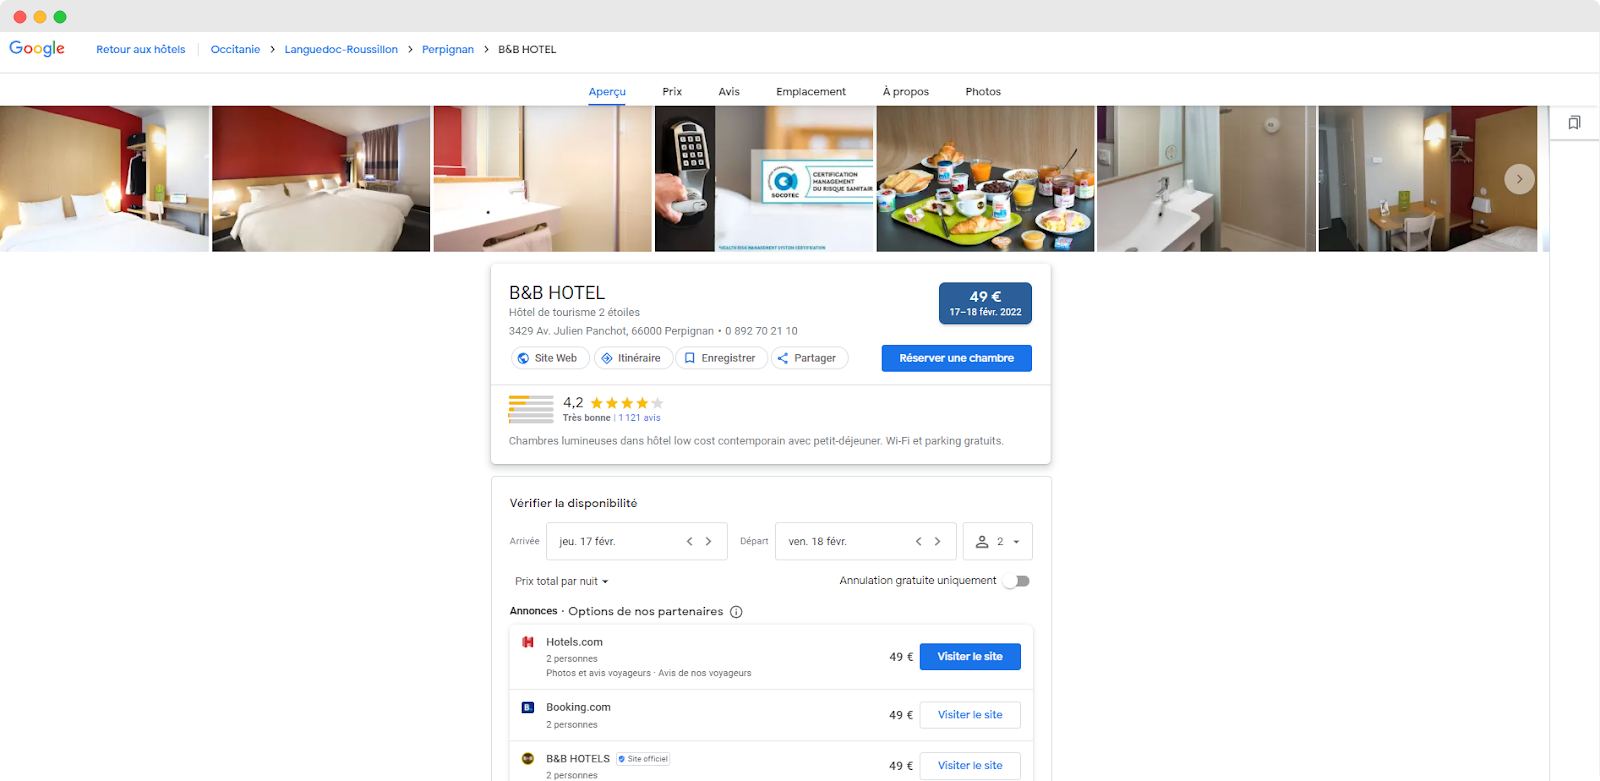 Hotel profile on Google